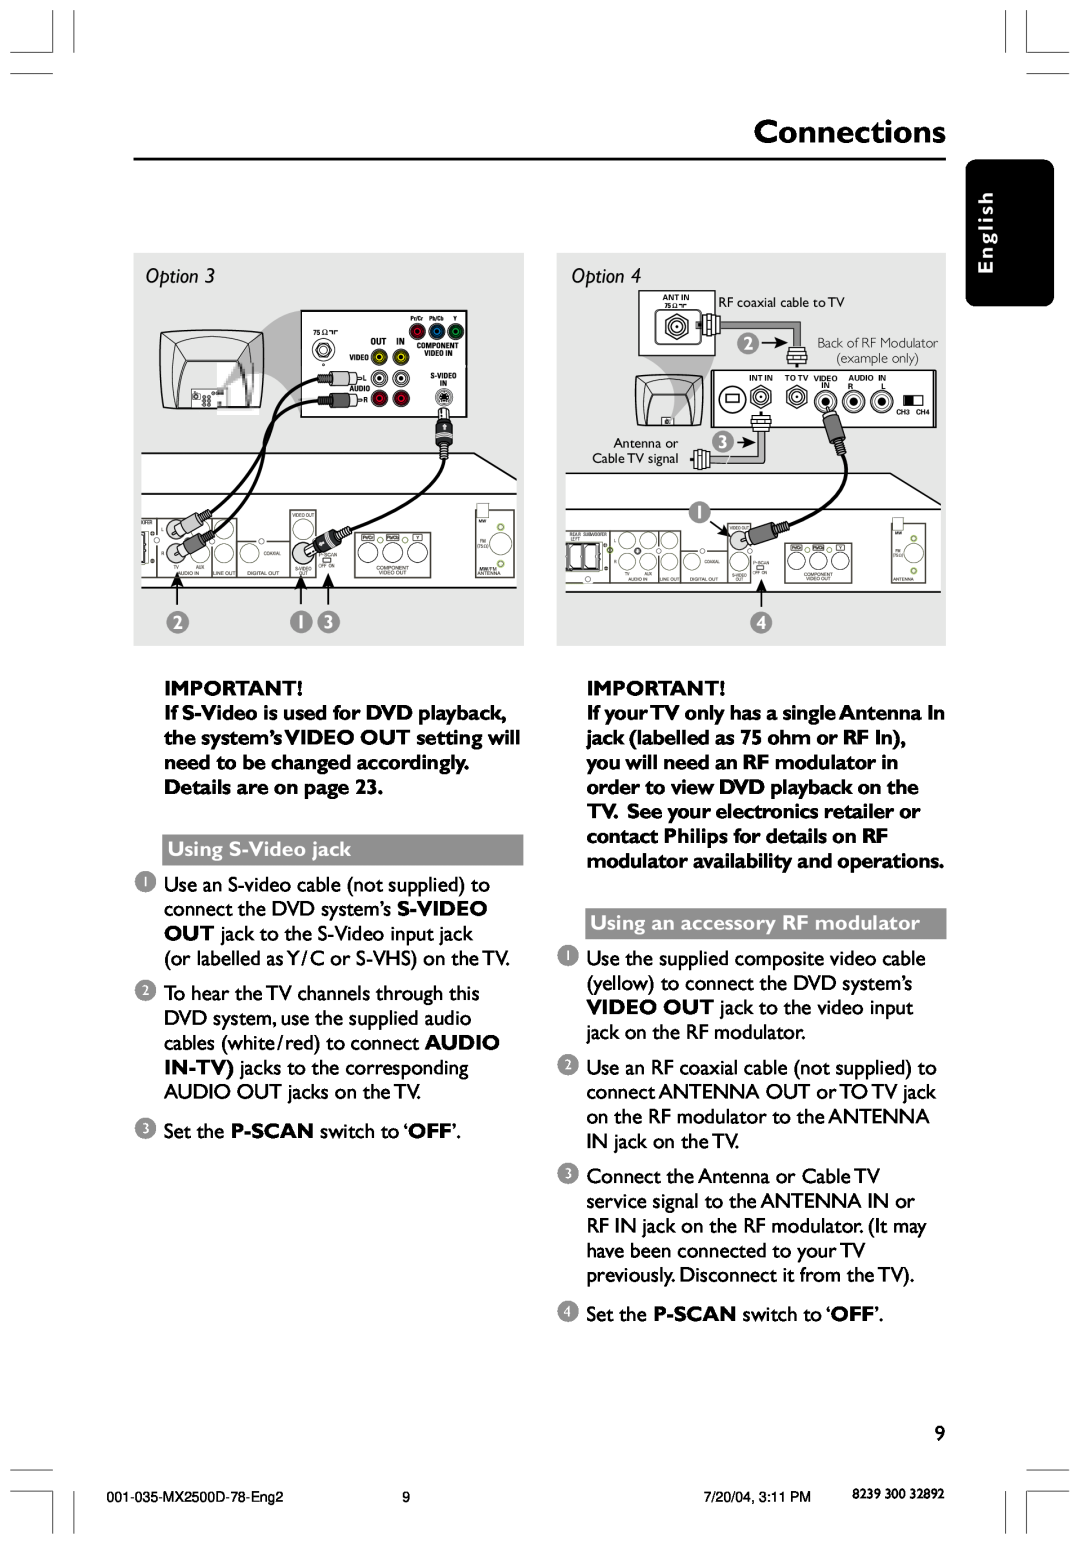 Philips 78, MX2500D user manual Connections, Option, English, Using S-Videojack, Using an accessory RF modulator 